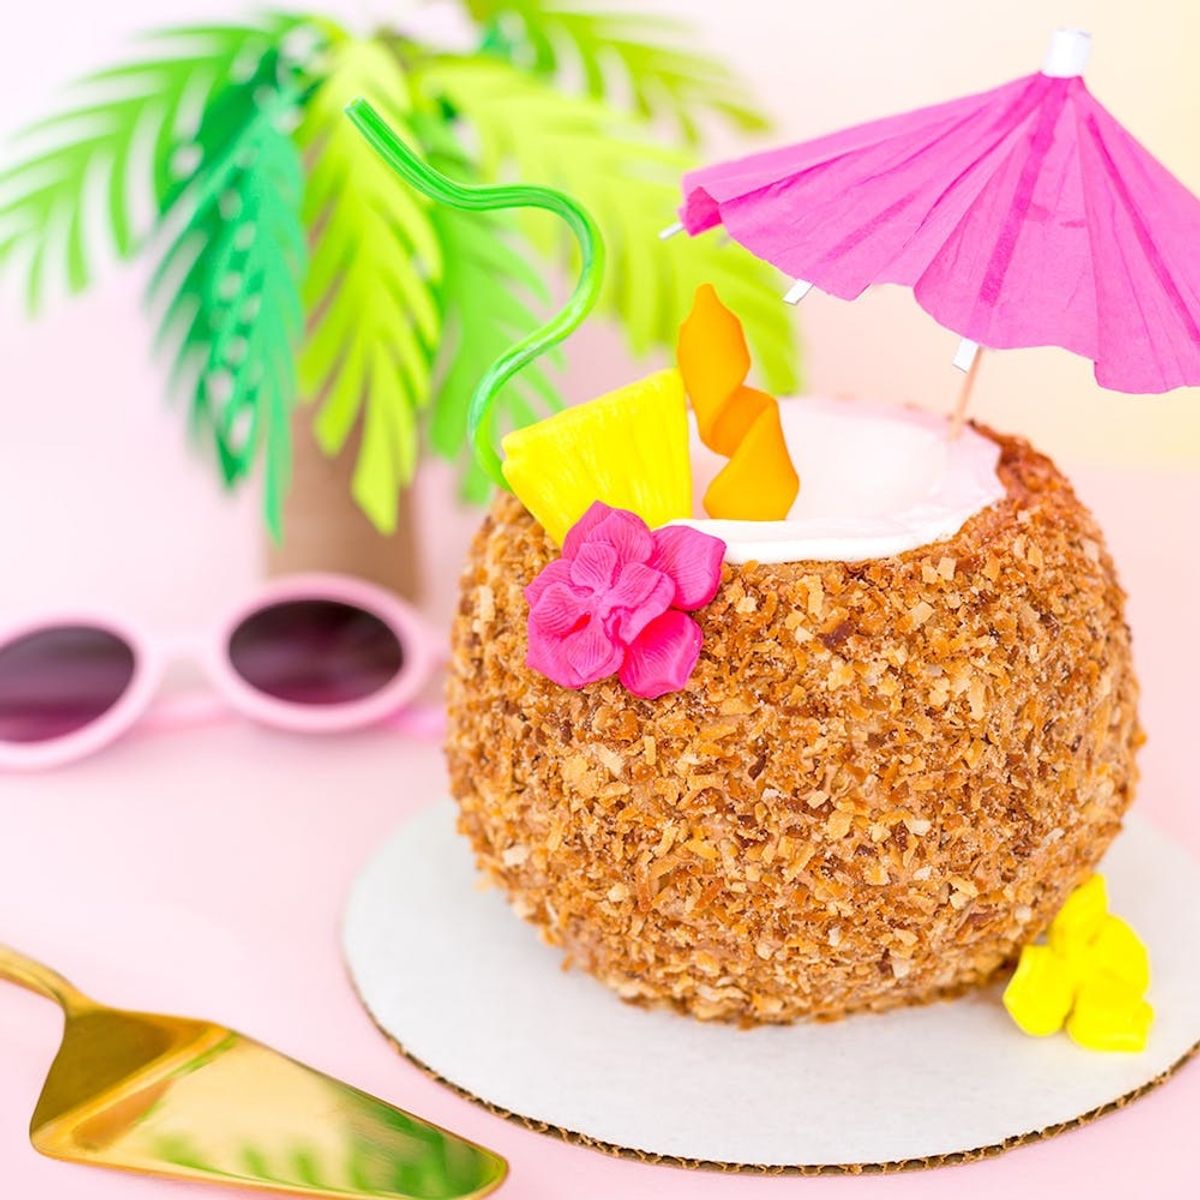 Piña Colada Cake, Tassel Hats, and More DIYs to Make This Weekend